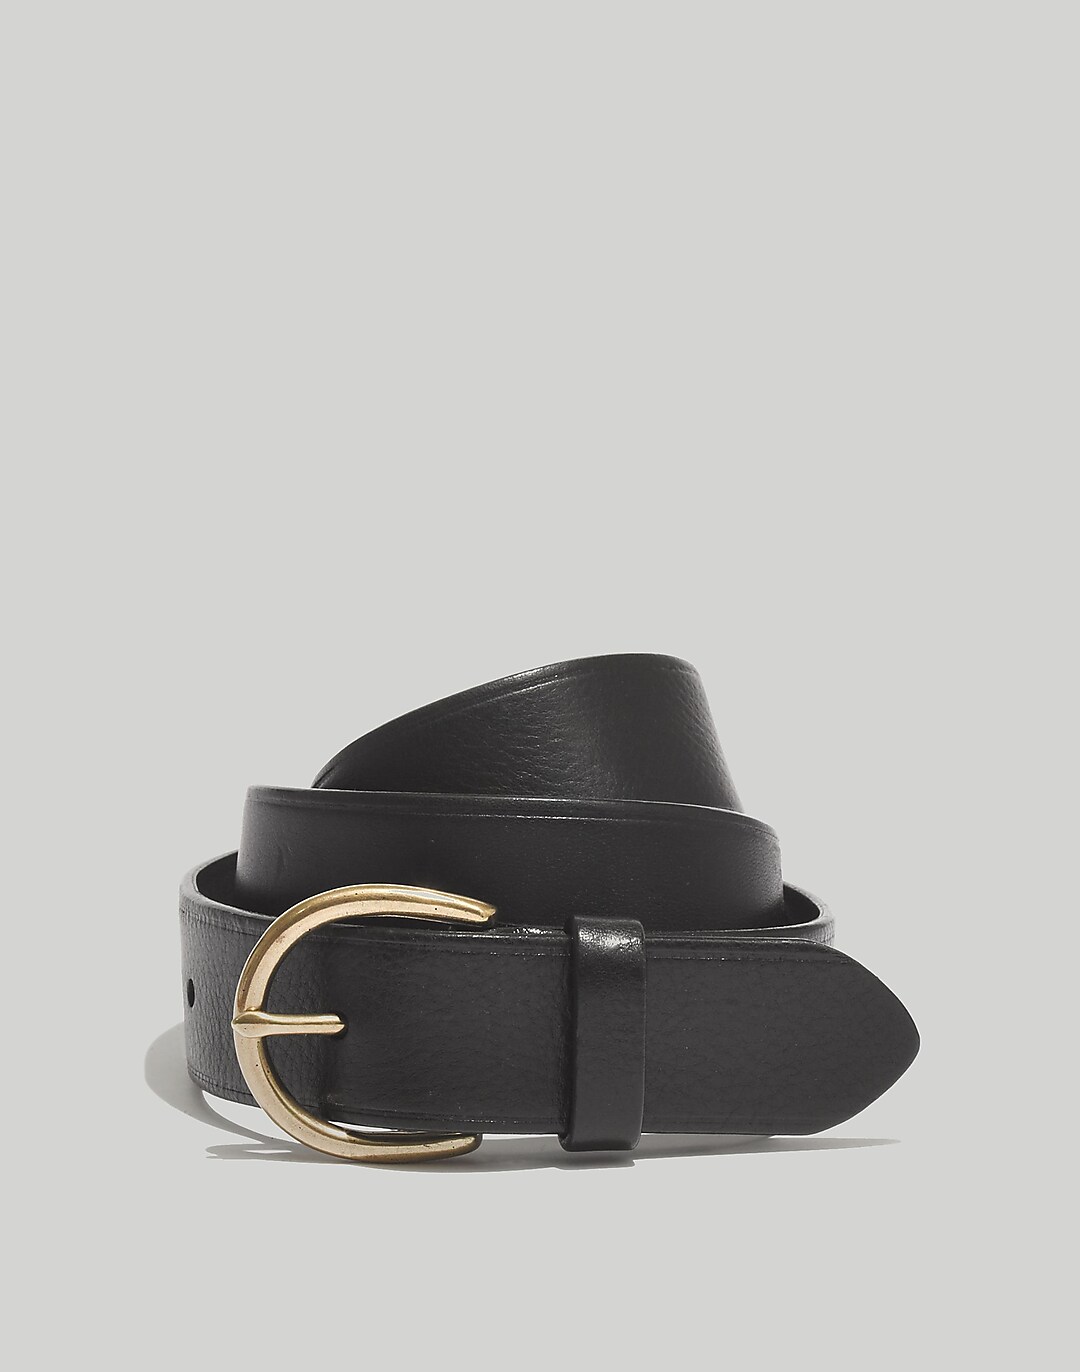 Madewell Medium Perfect Leather Belt in True Black - Size M